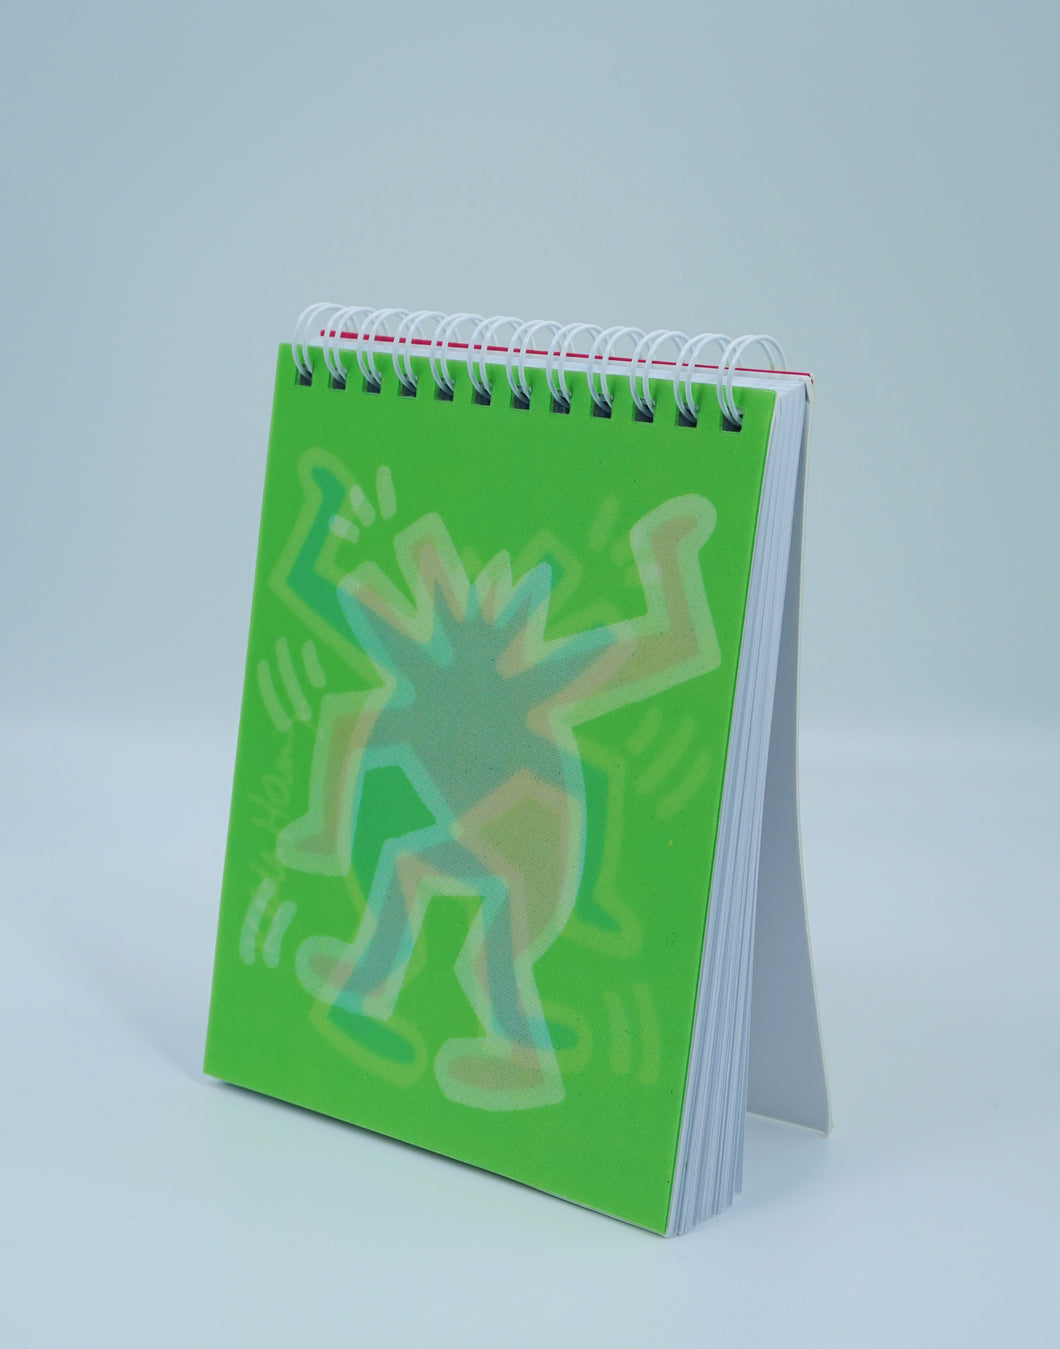 Keith Haring Dancing Dog Lenticular Notepad